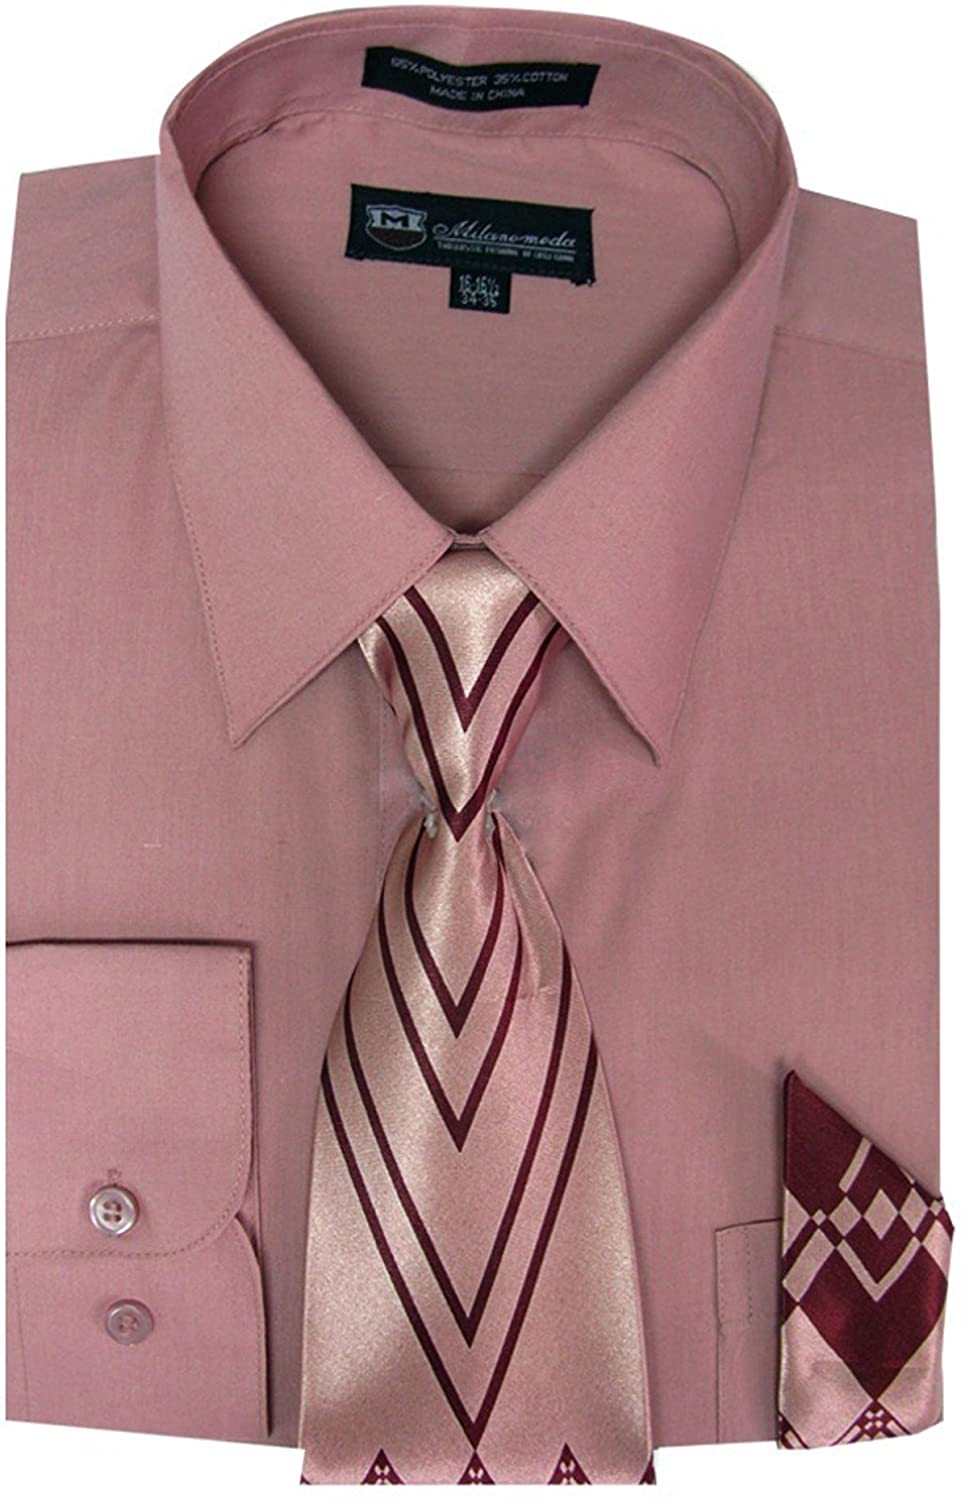 Milano Moda Mens Dress Shirt with Tie/Handkerchief HLSG35 New York Brand 